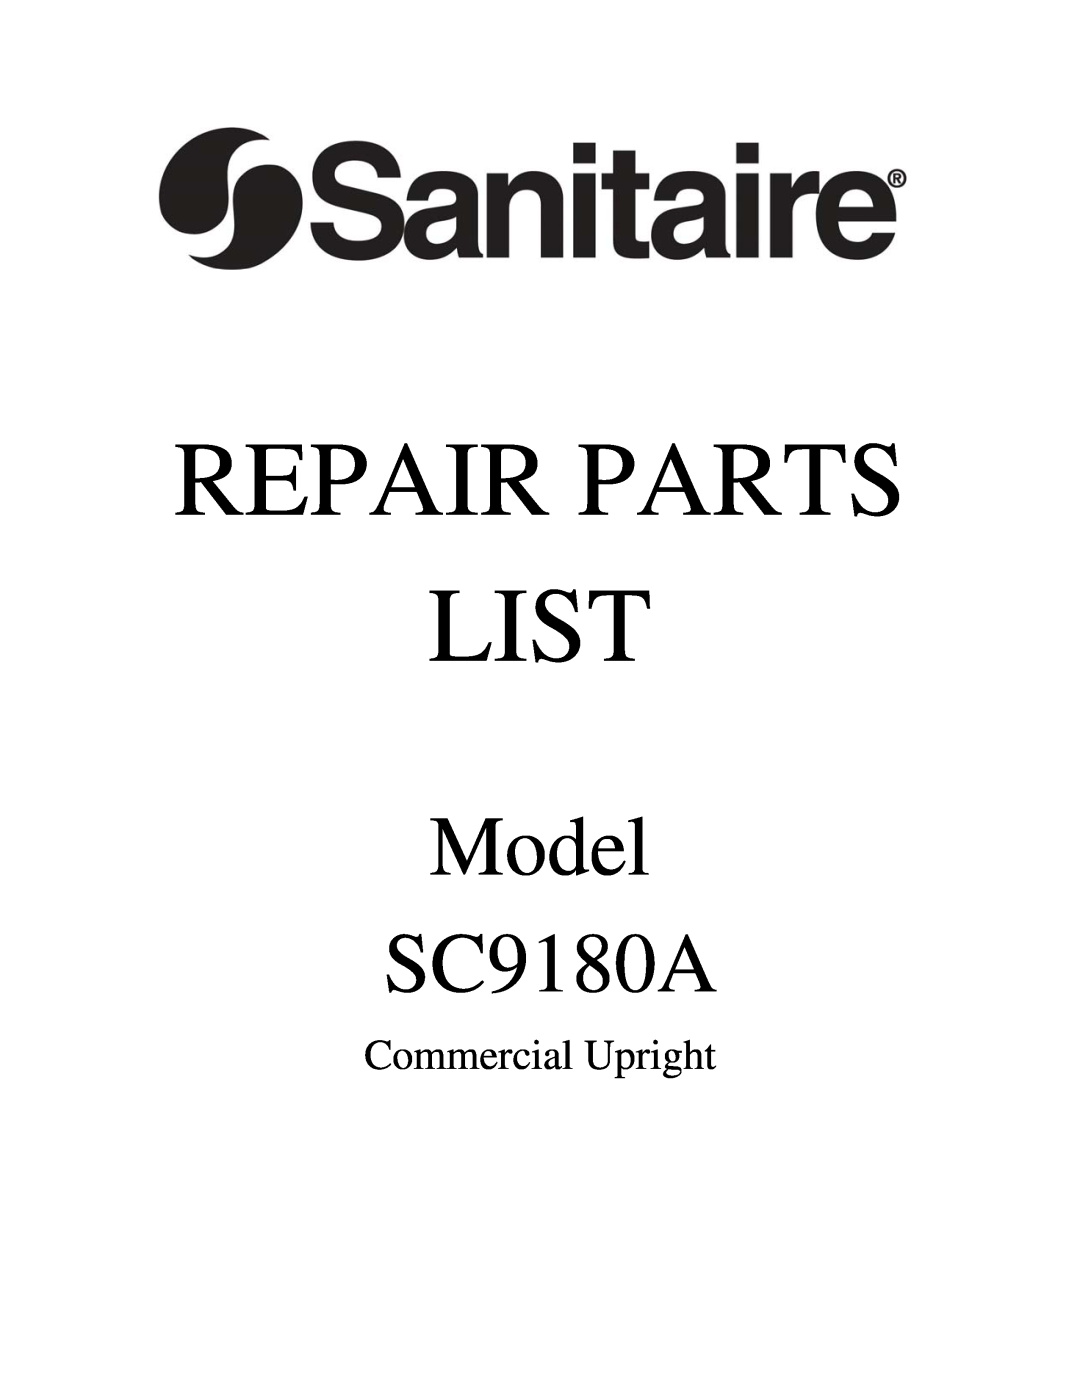 Sanitaire manual Repair Parts List, Model SC9180A, Commercial Upright 